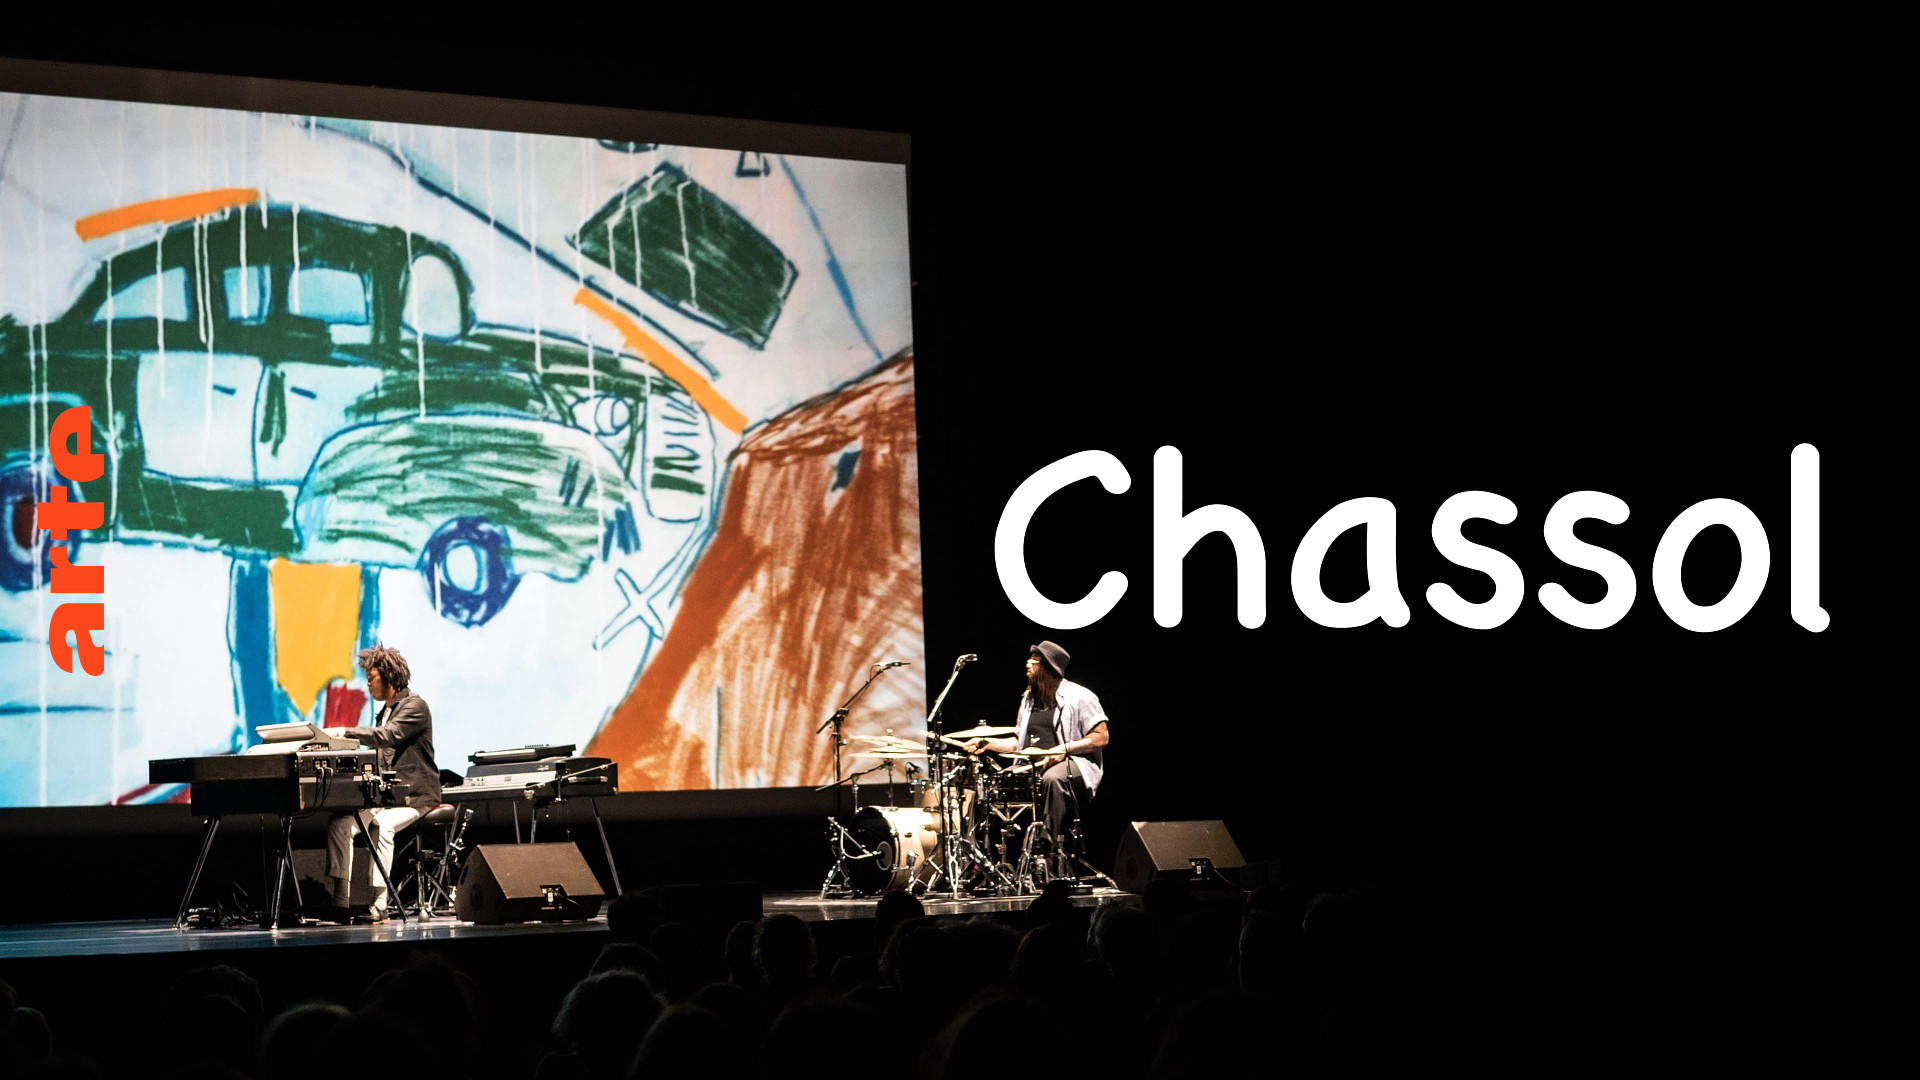 Chassol / Basquiat